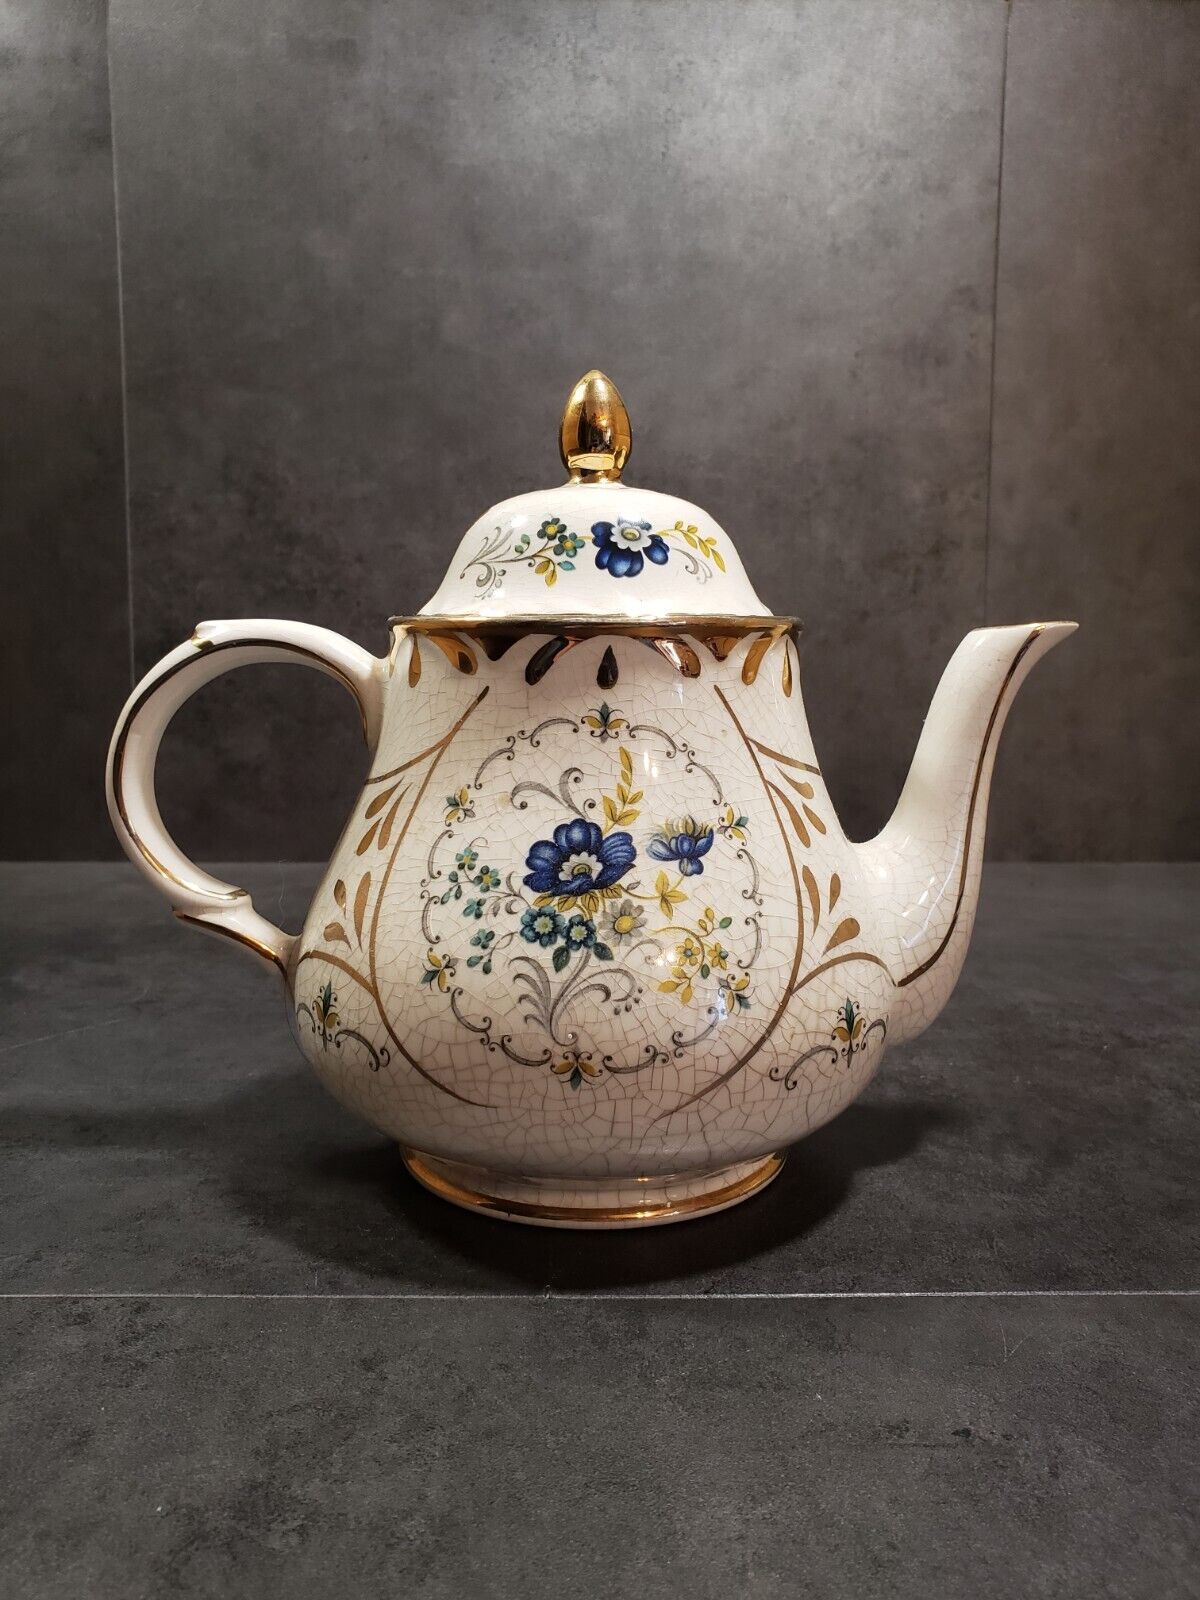 Arthur Wood Chatsworth England Vintage Tea Pot with Gold Trim